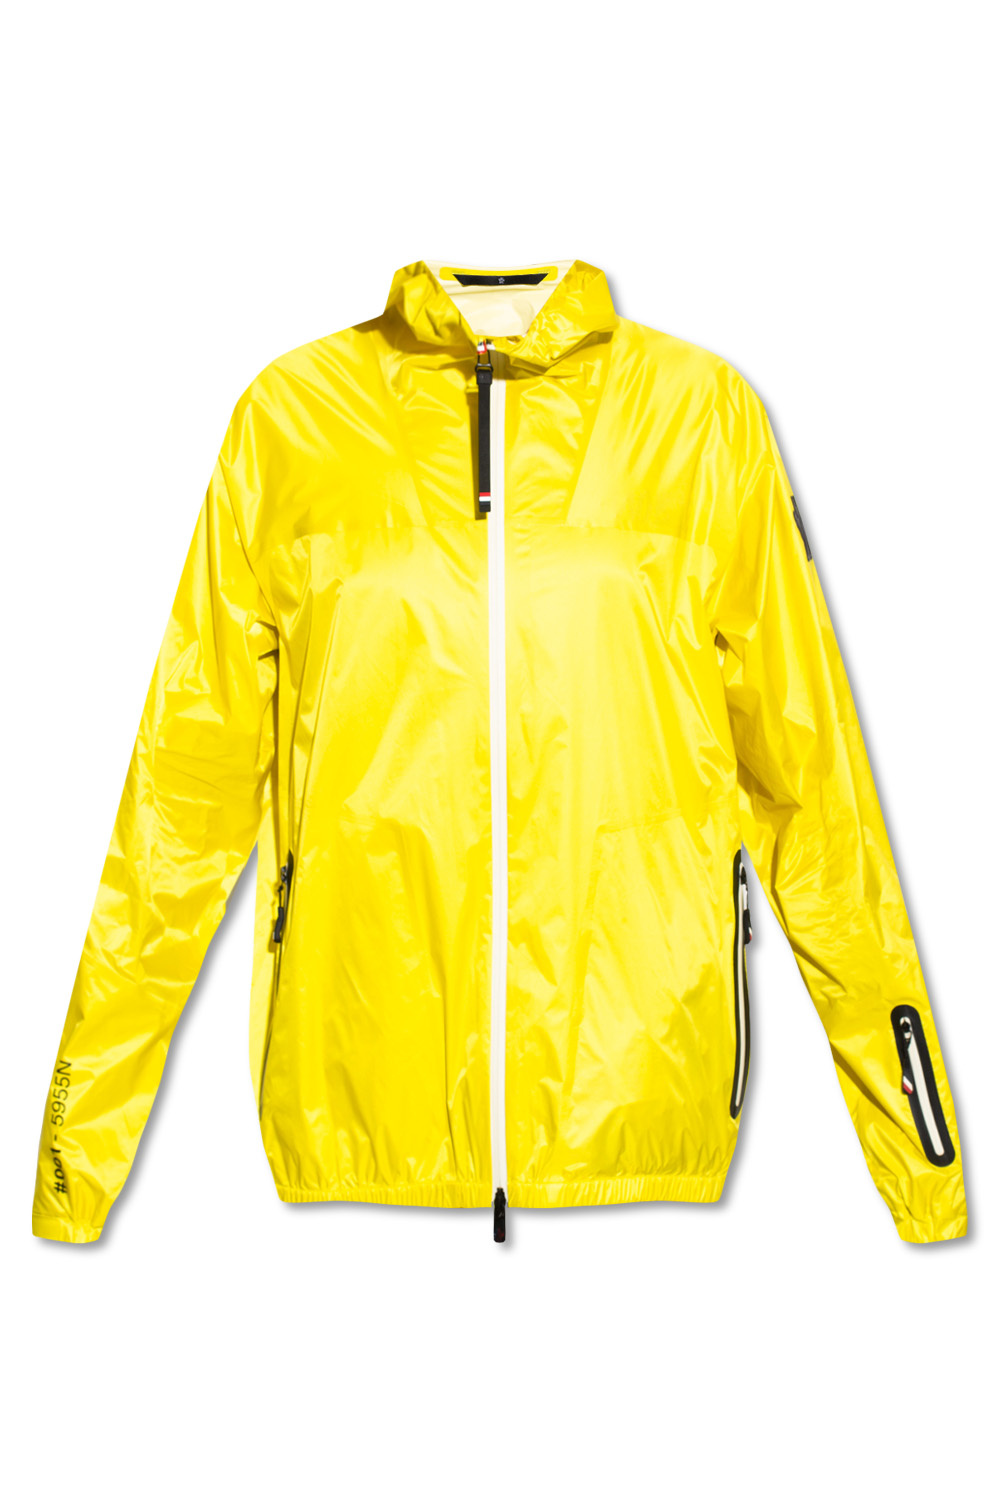 Moncler Grenoble ‘Fiernaz’ hooded jacket